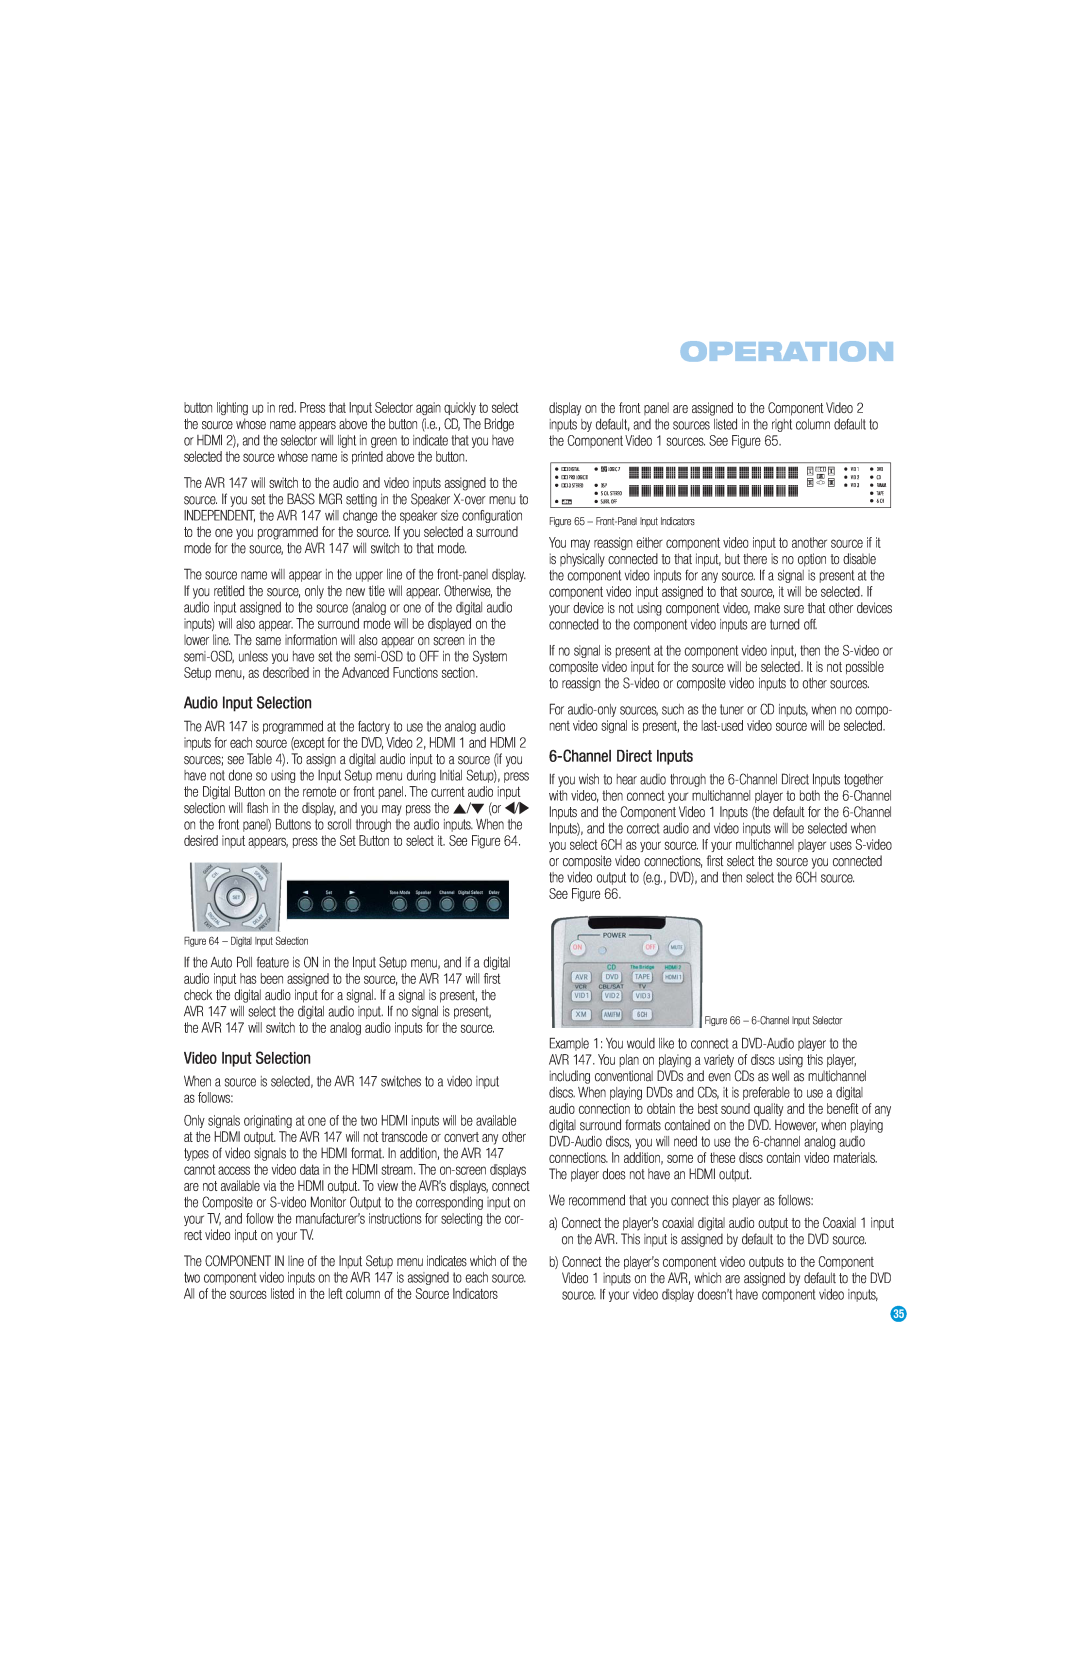 Harman-Kardon AVR 147 owner manual Audio Input Selection, Video Input Selection, ChannelDirect Inputs, Operation 